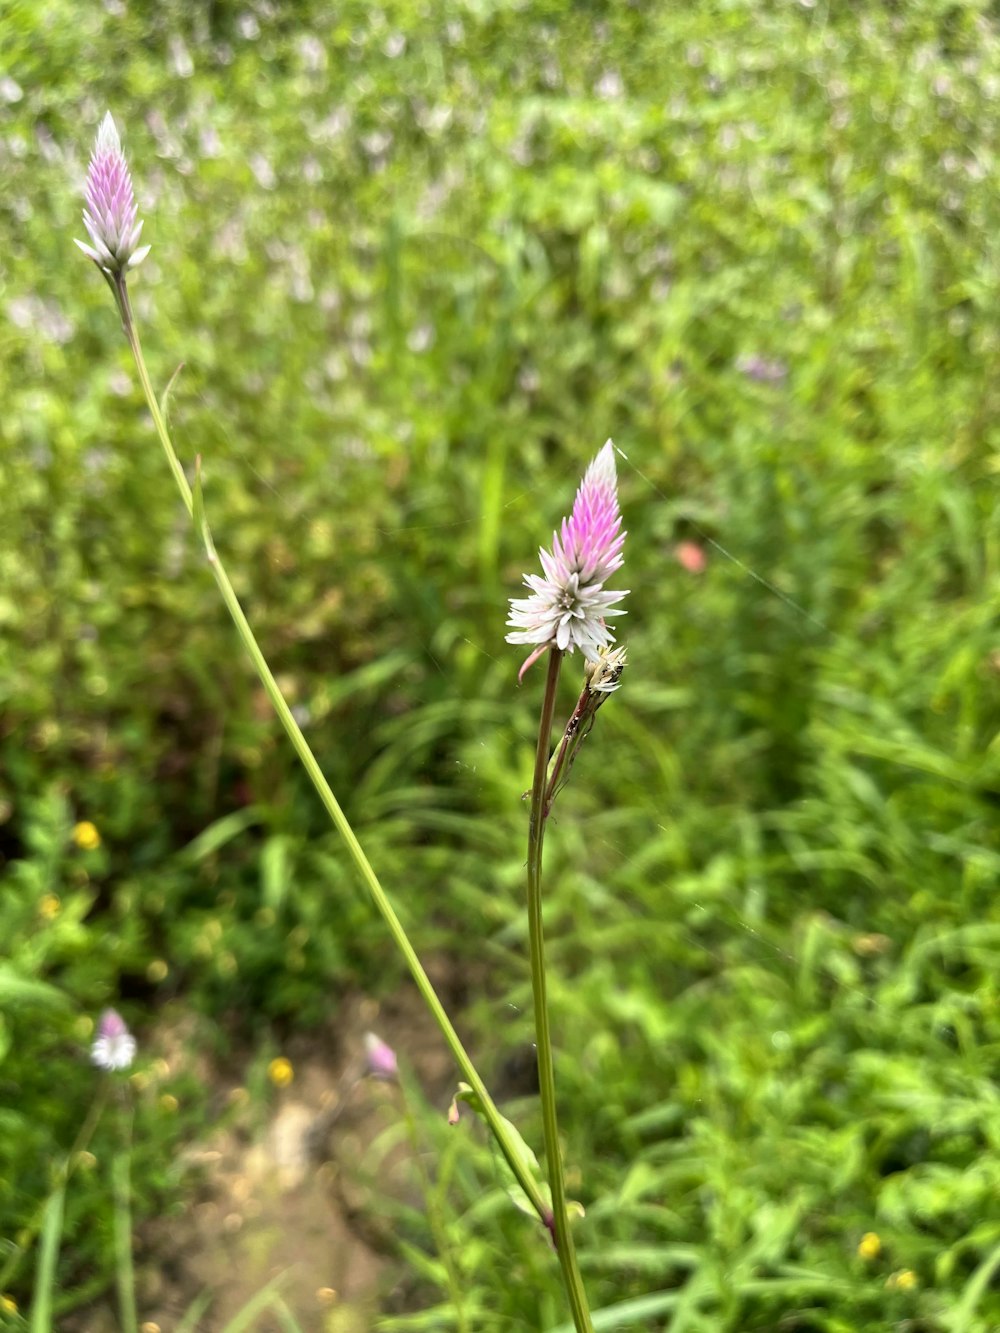 a close-up of a flower